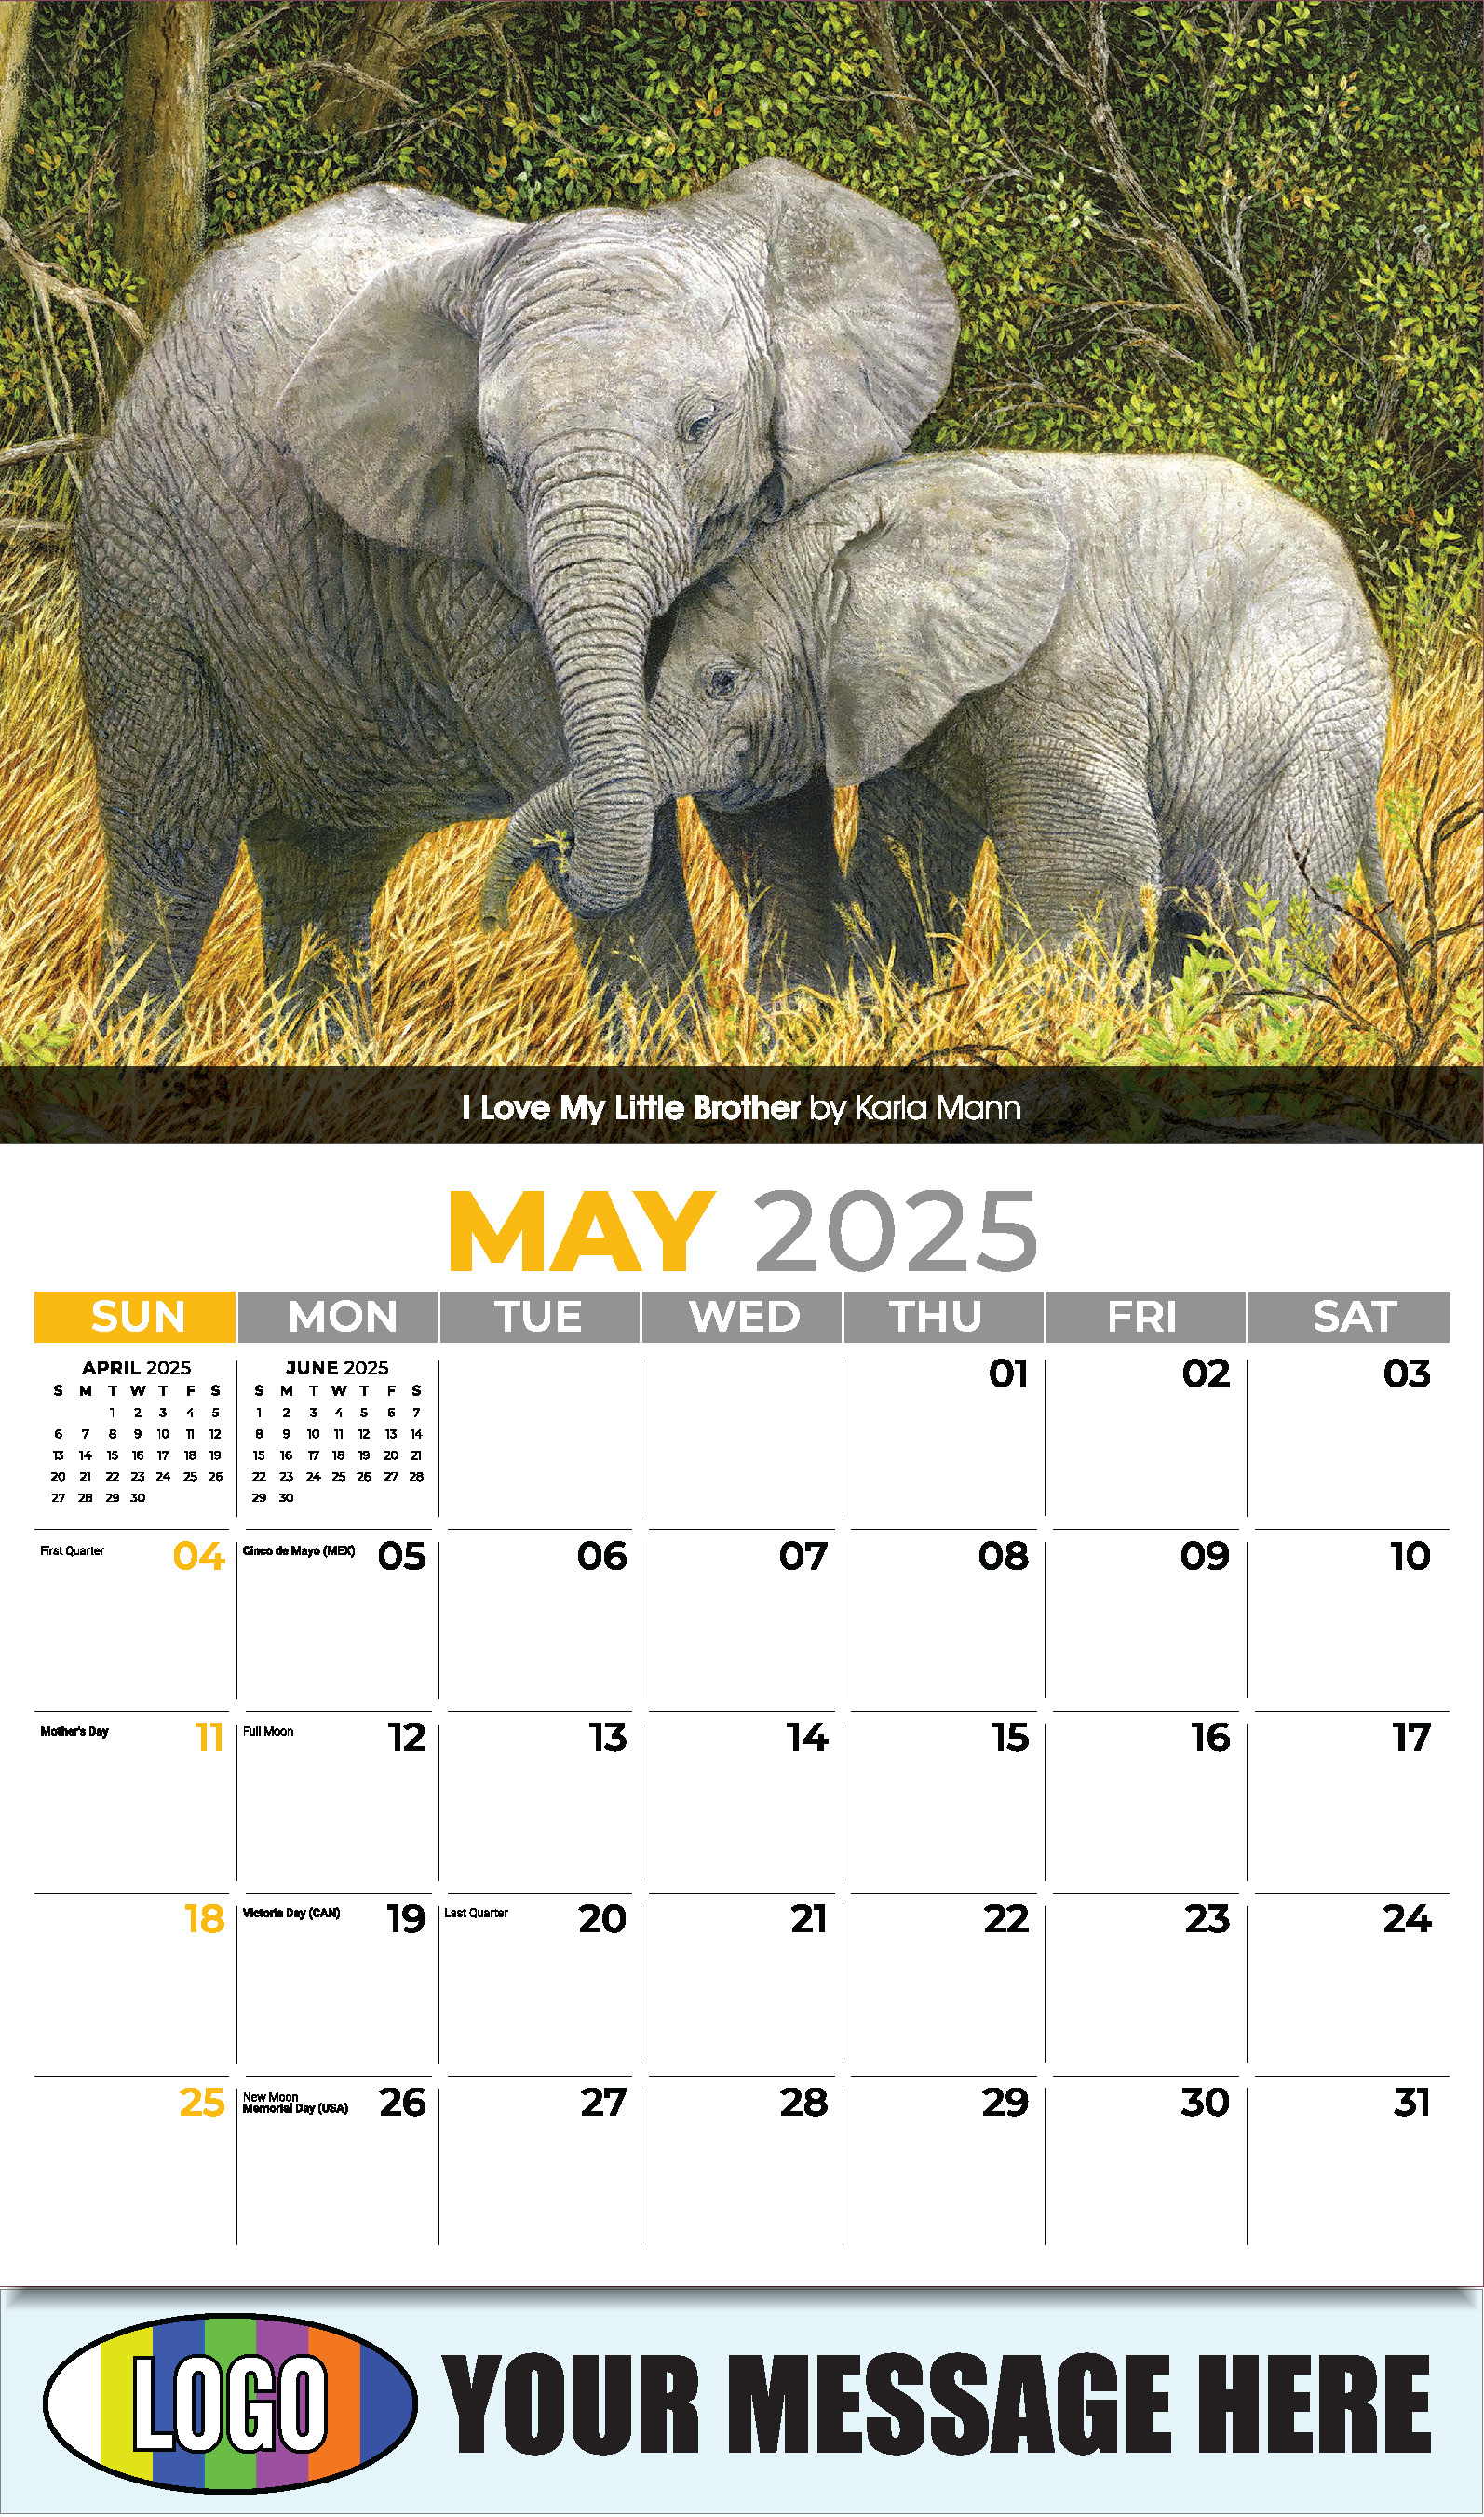 Wildlife Art Portraits 2025 Business Promotion Wall Calendar - May